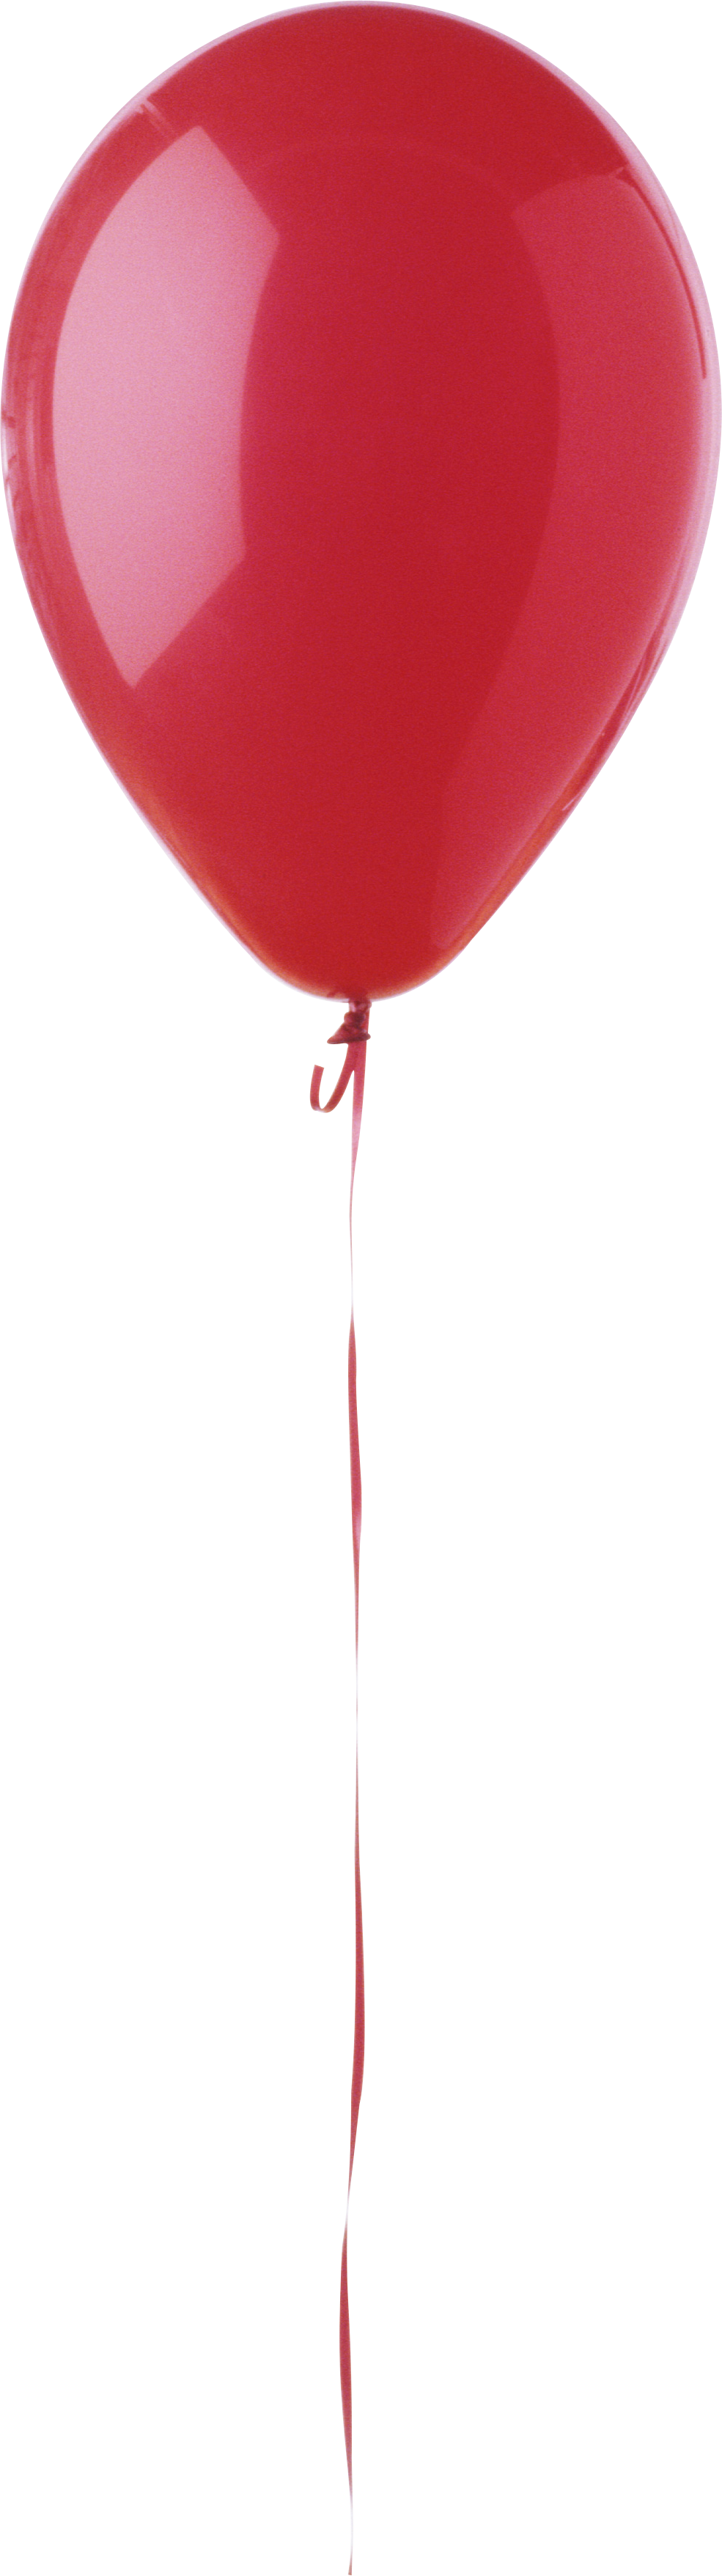 balloon clipart - Google Sear